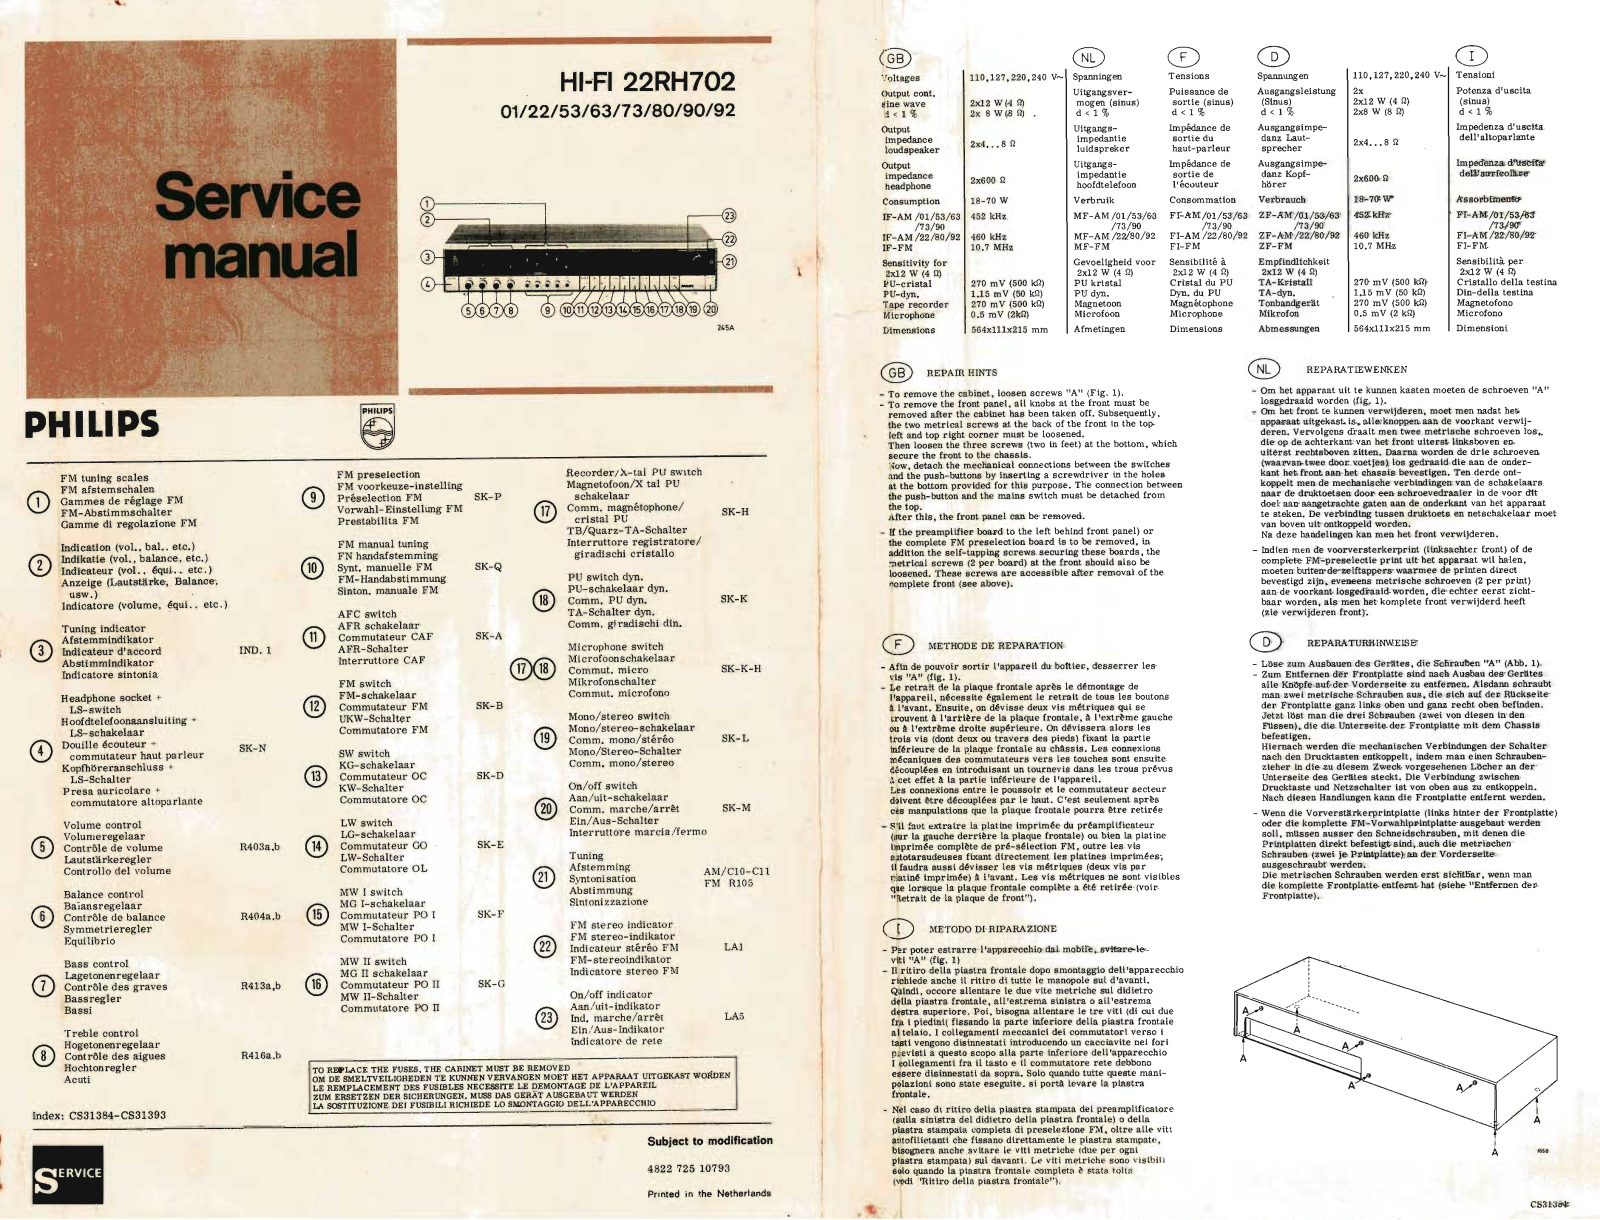 Philips 22-RH-702 Service Manual